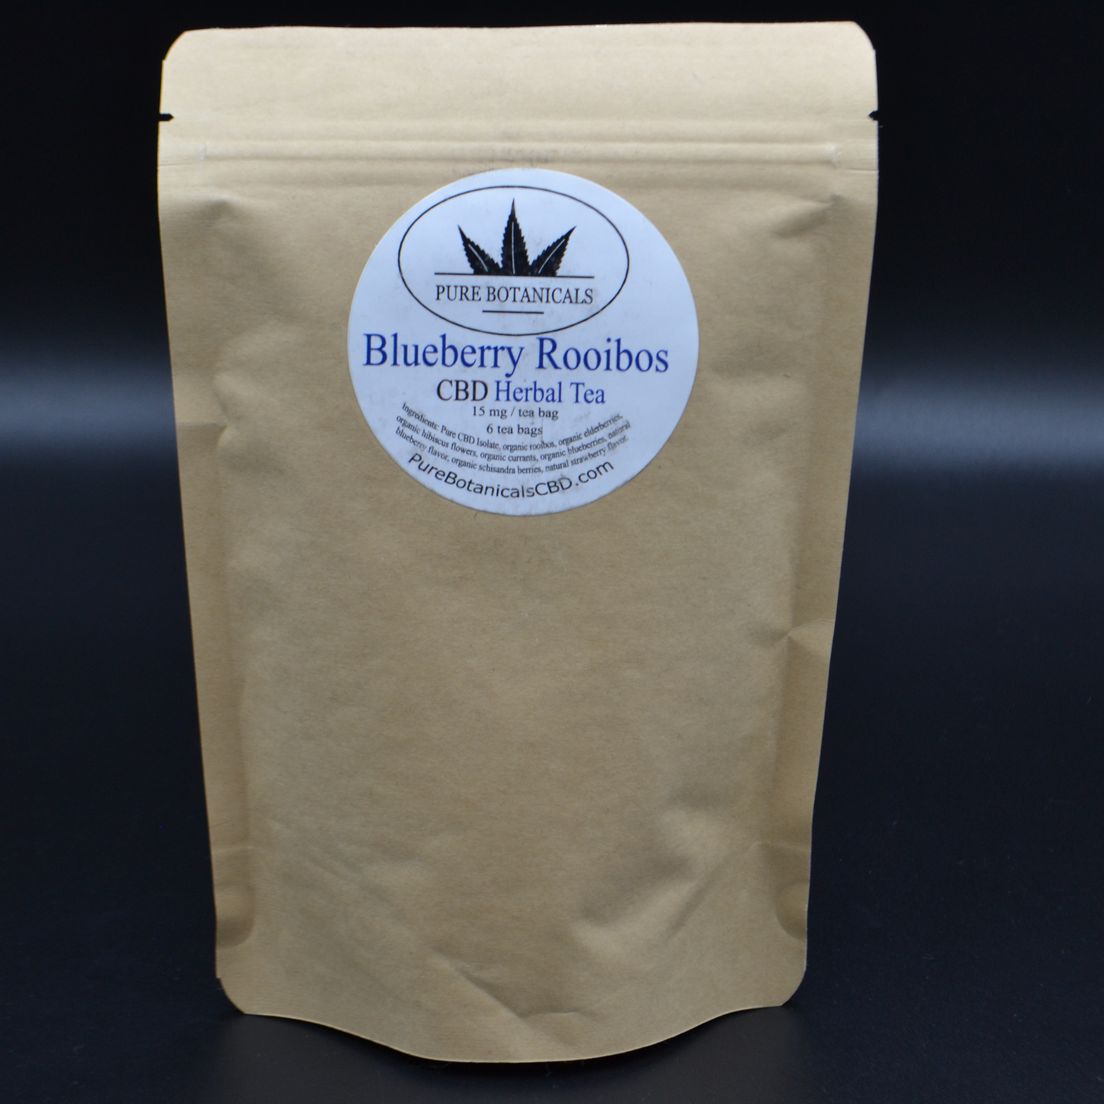 15mg CBD Blueberry Rooibos Herbal Tea